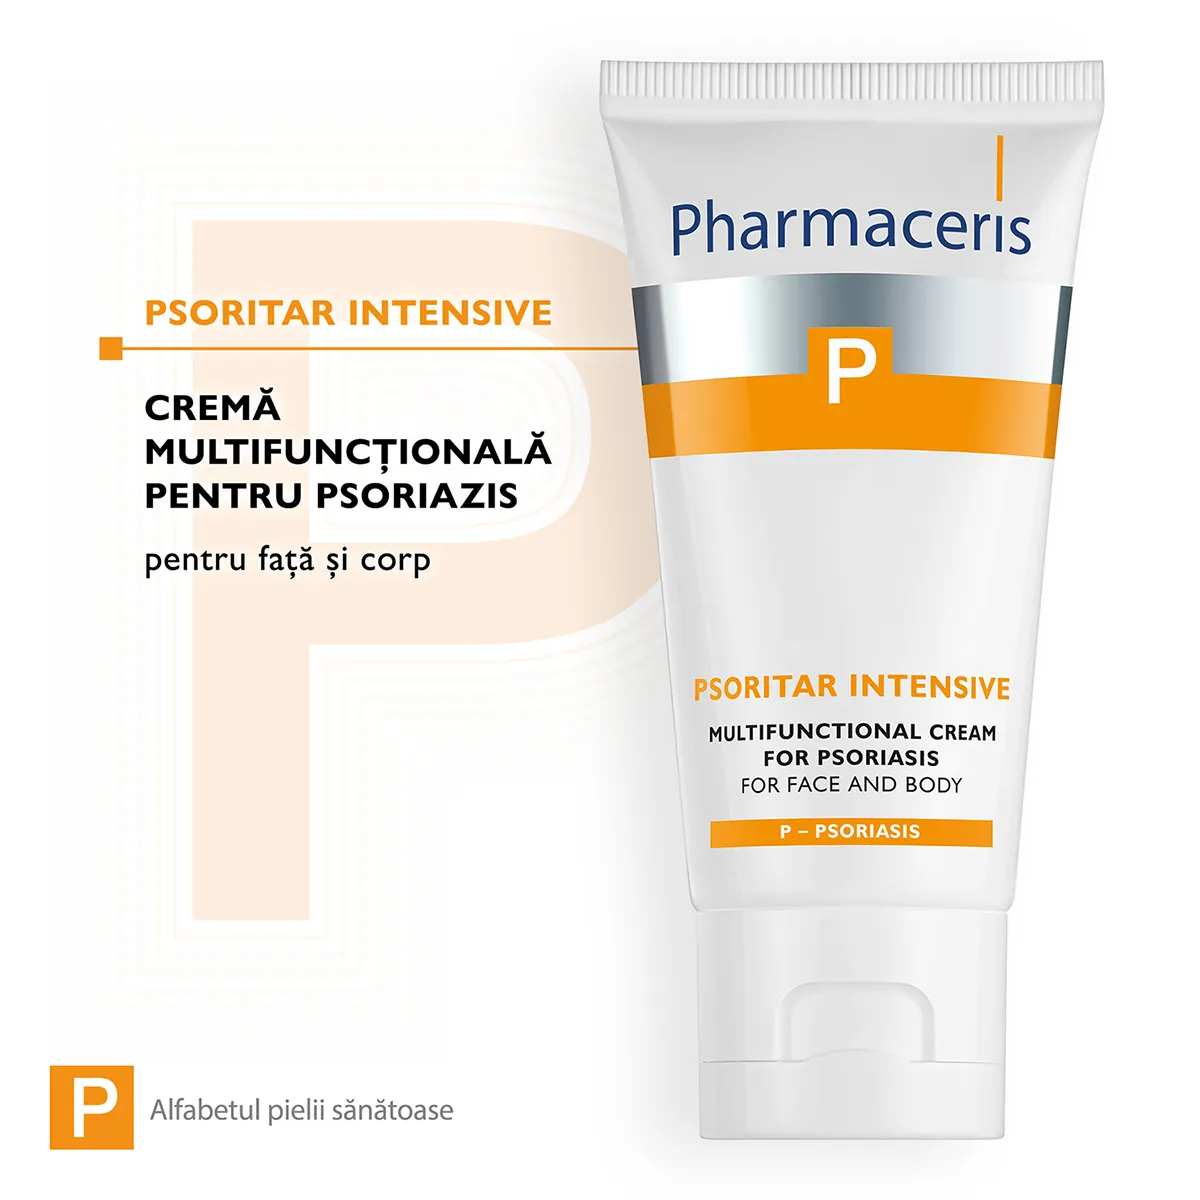 Crema multifunctionala pentru psoriazis Psoritar-Intensive P, 50ml, Pharmaceris 